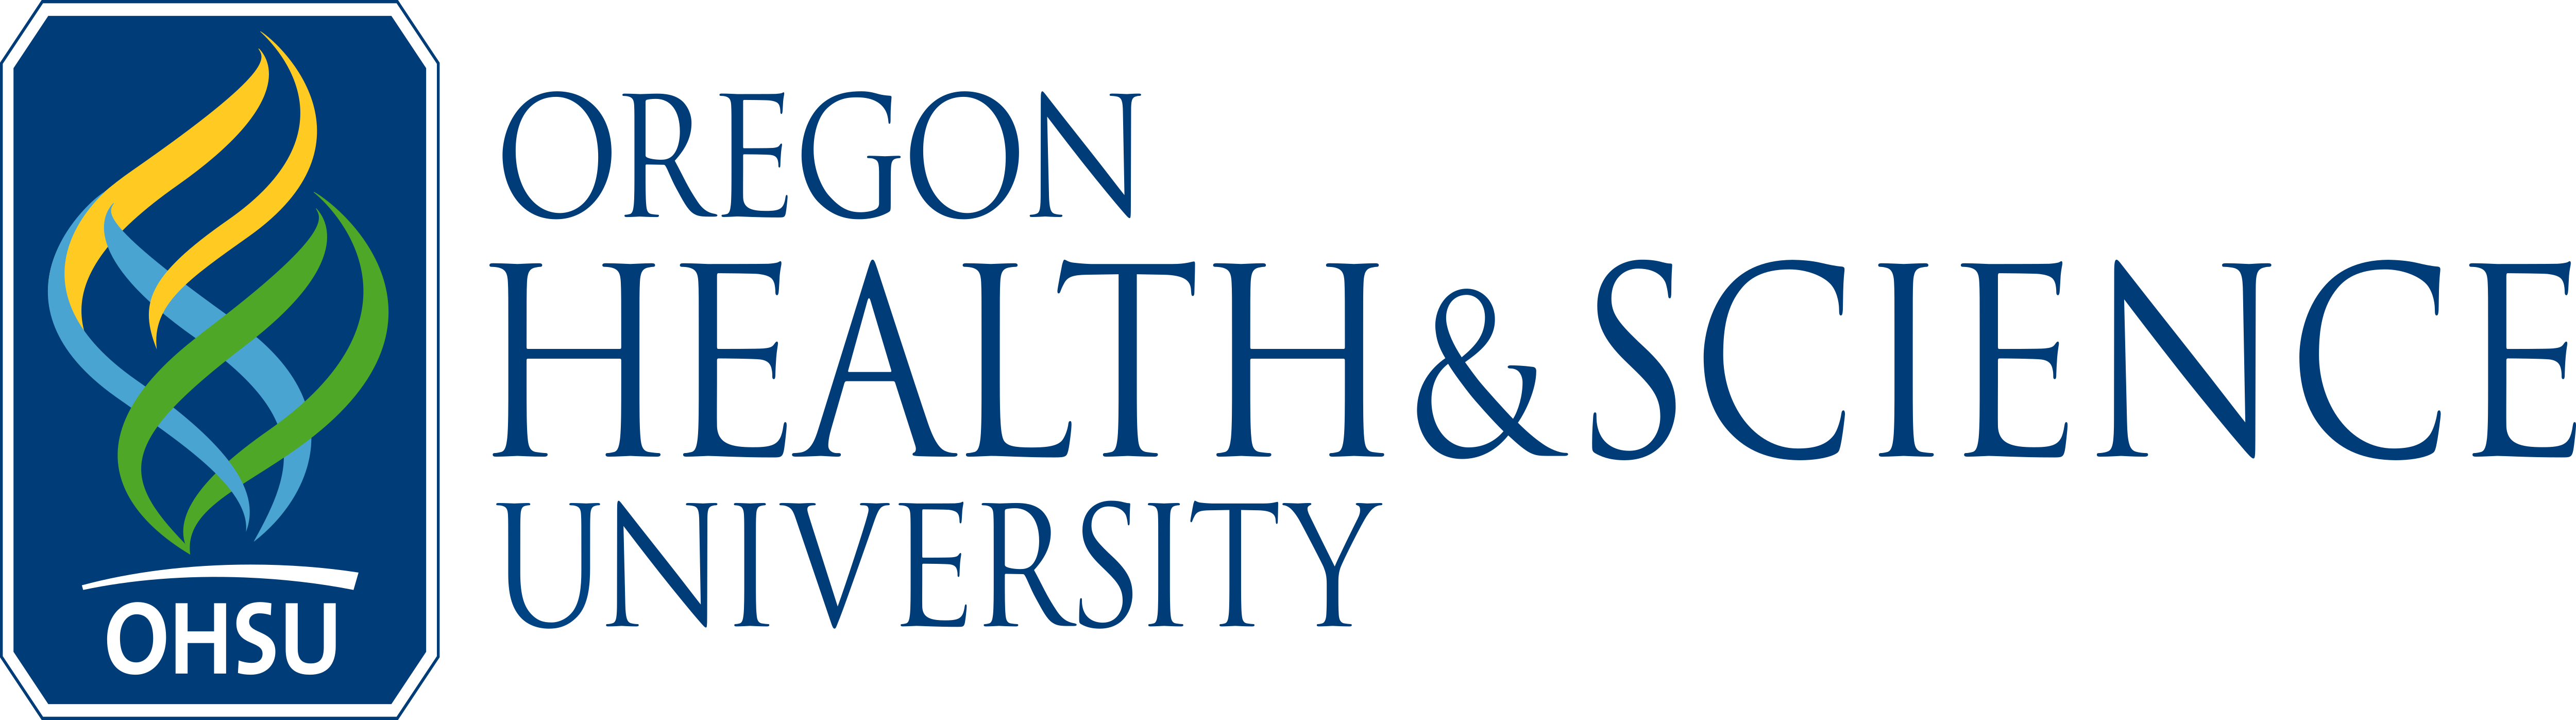 Oregon Health & Science University 